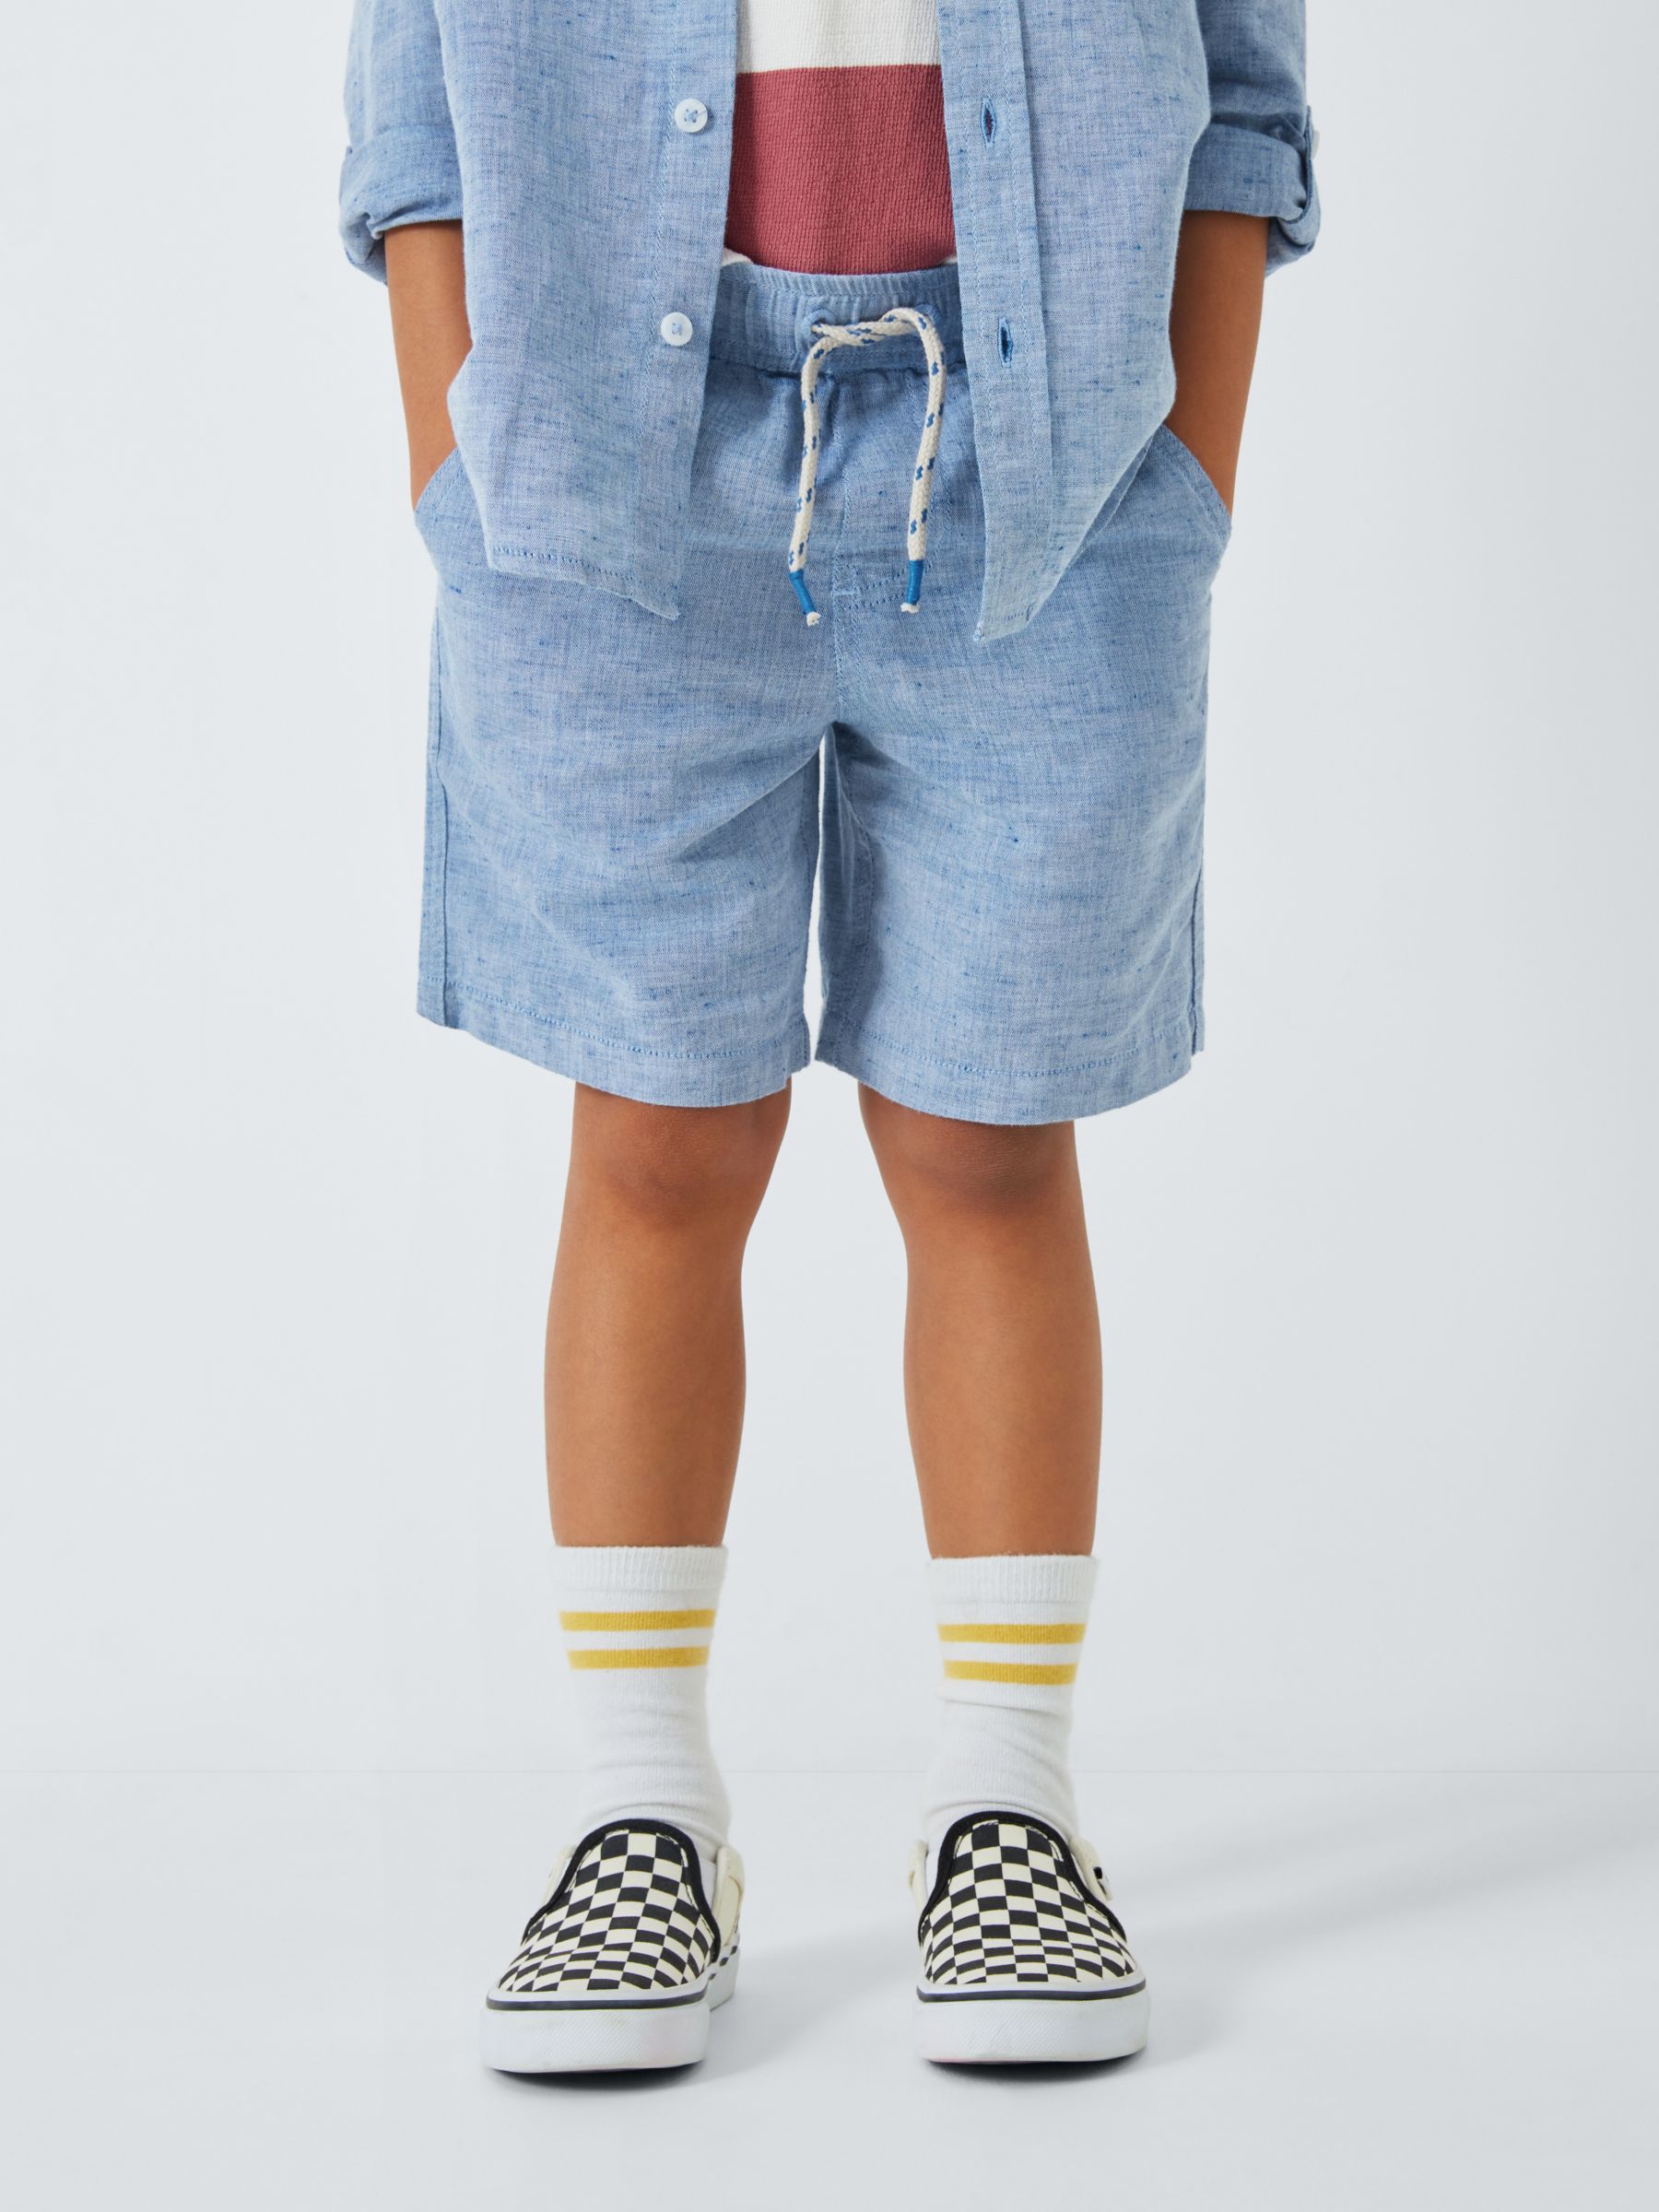 John Lewis Kids' Chambray Linen Blend Shorts, Blue, 4 years